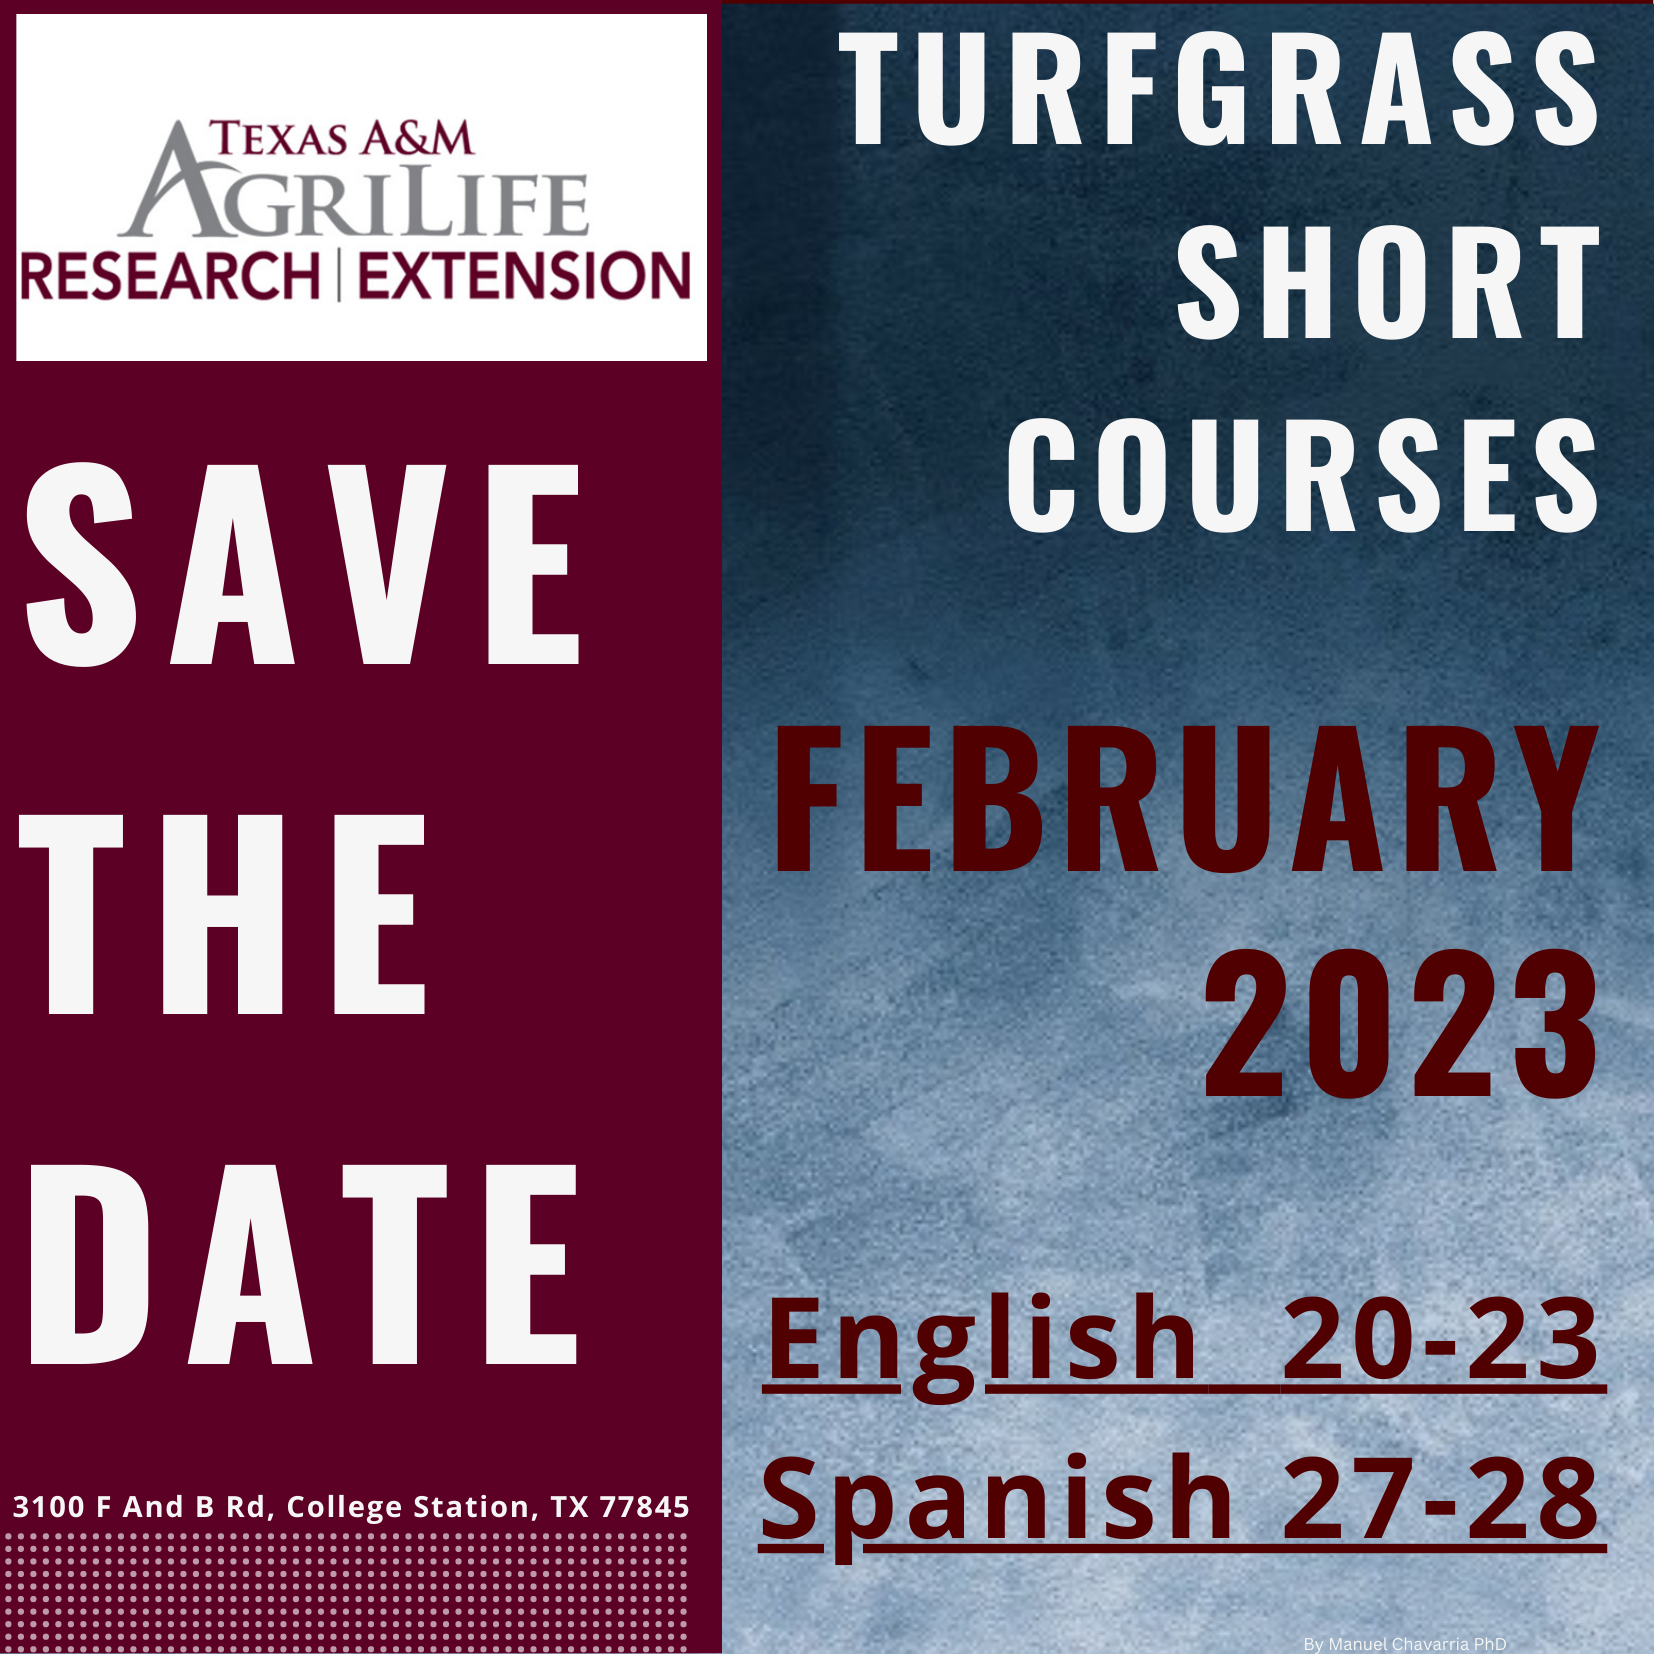 Turf Grass Short Courses Feb. 2023